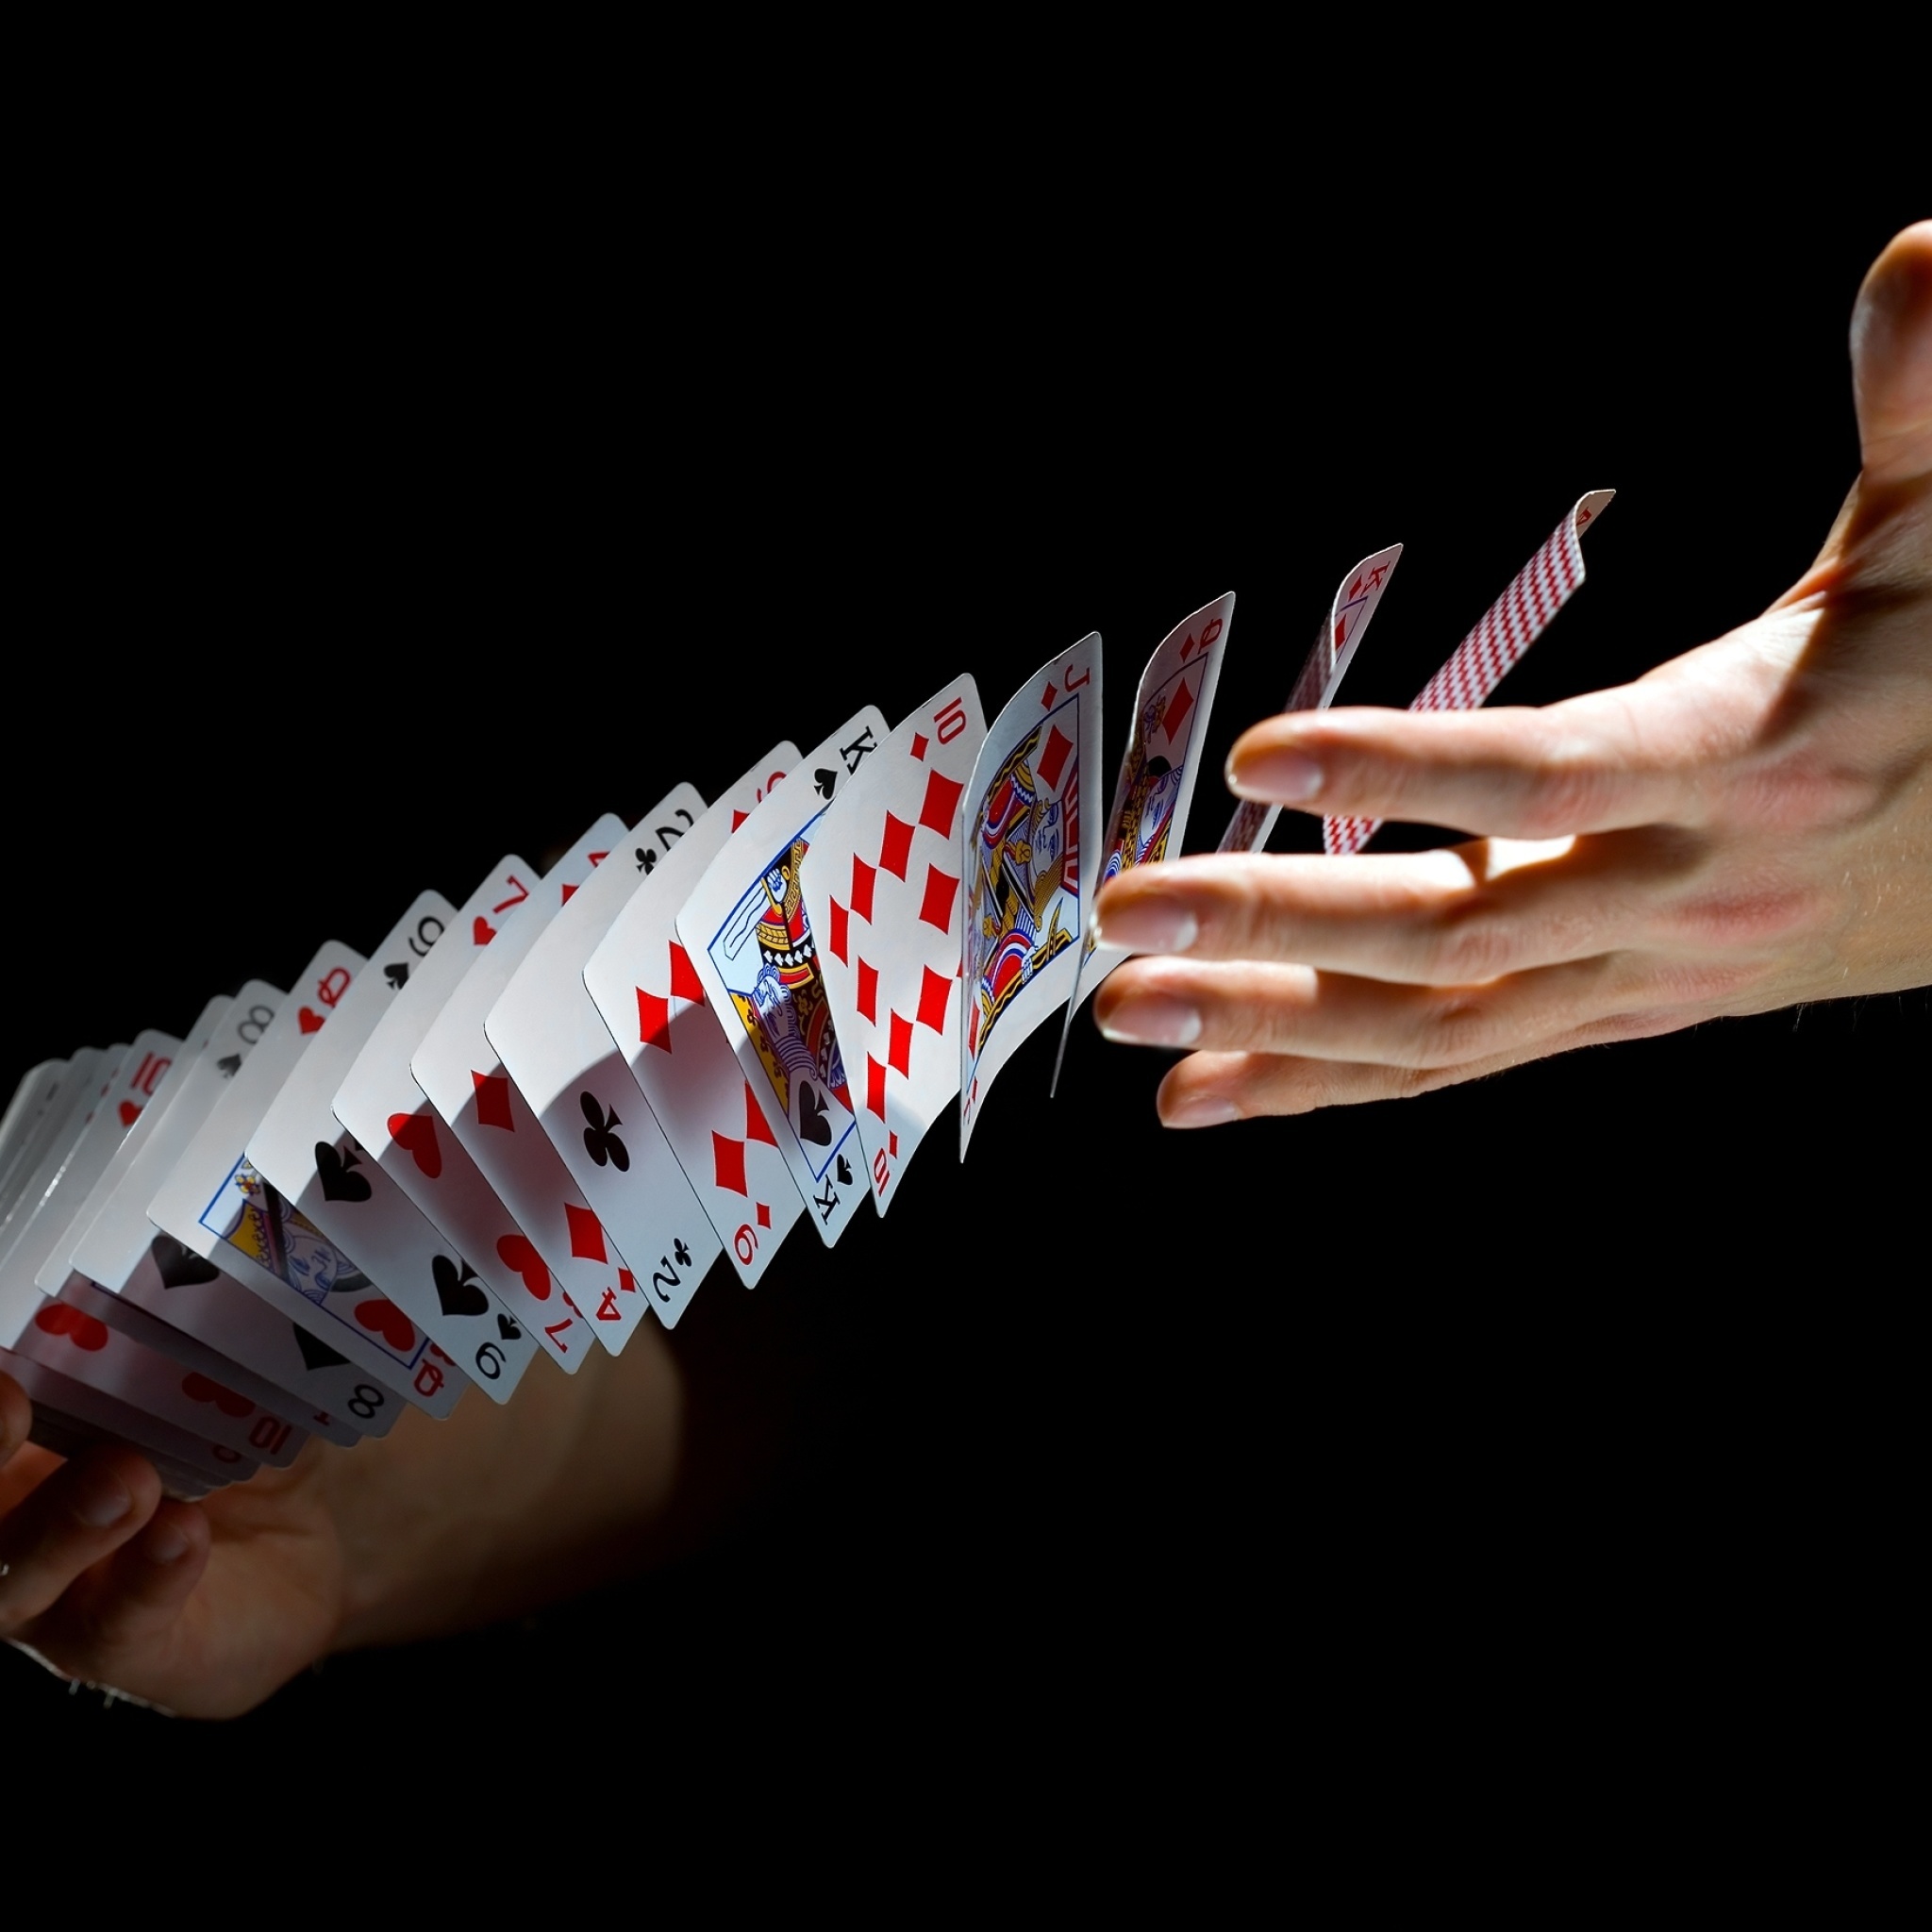 Das Playing cards trick Wallpaper 2048x2048